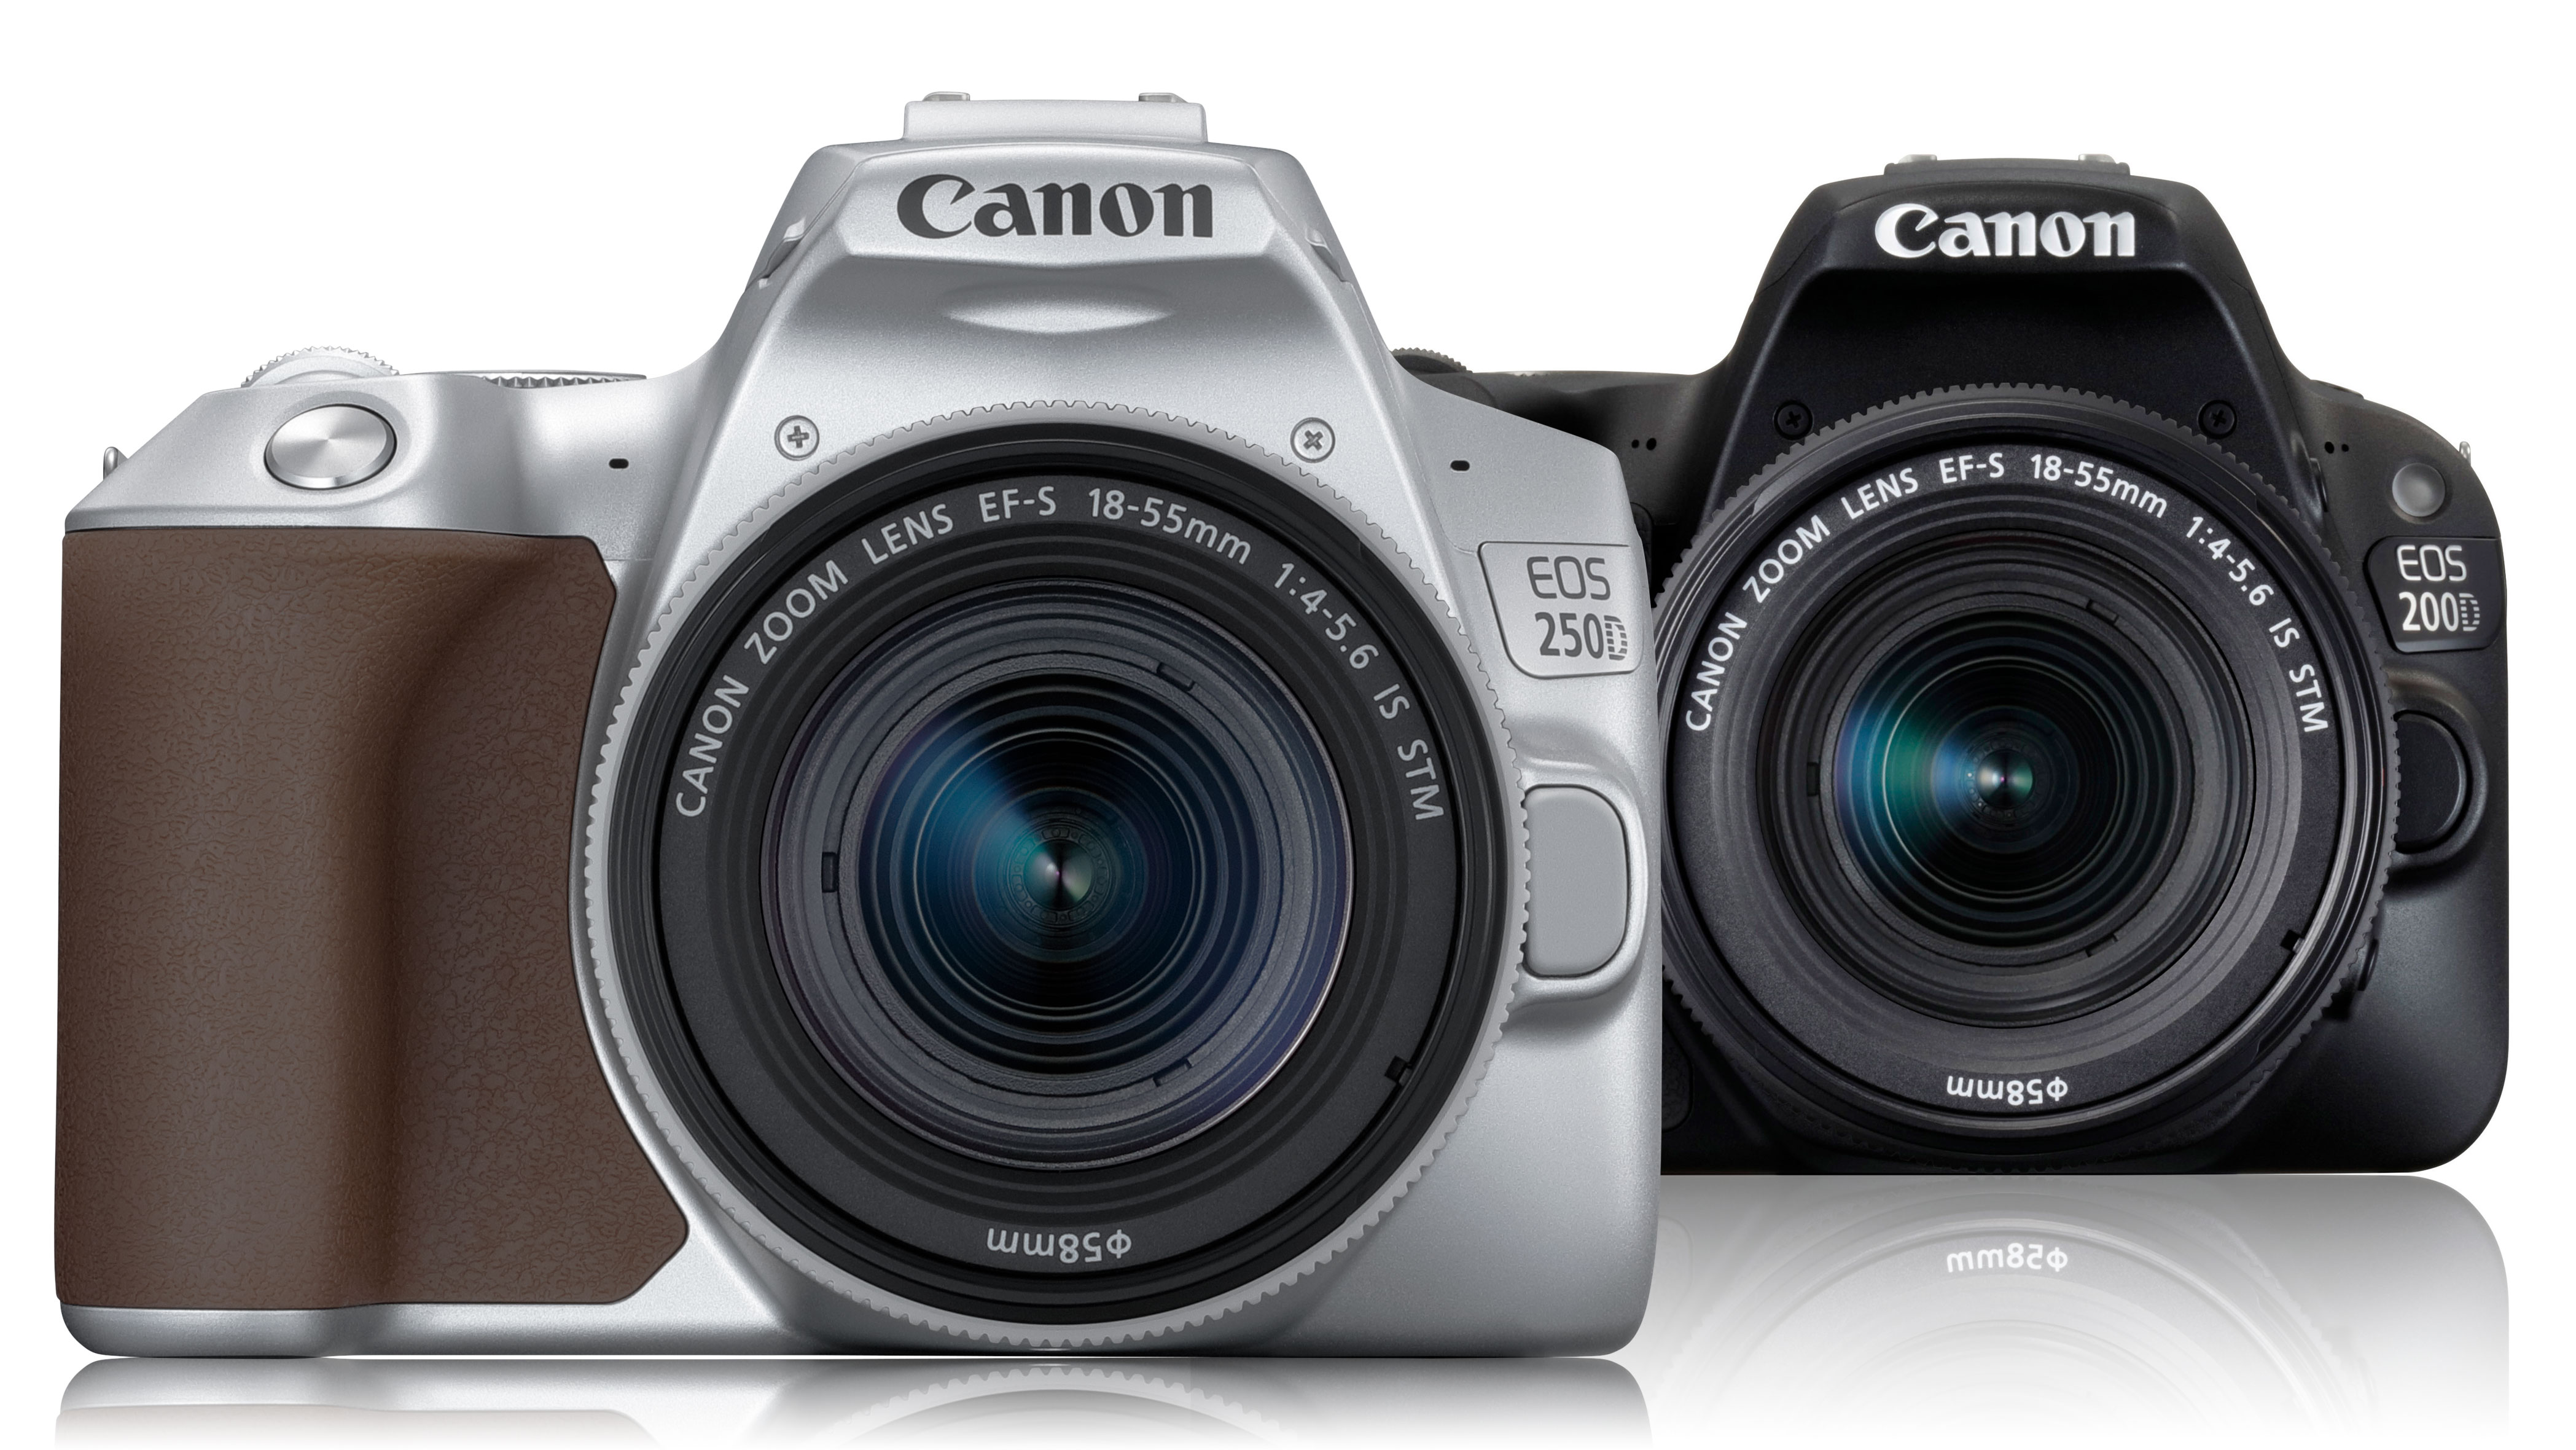 Camera Plus - The Canon EOS 250D is a brilliant camera get